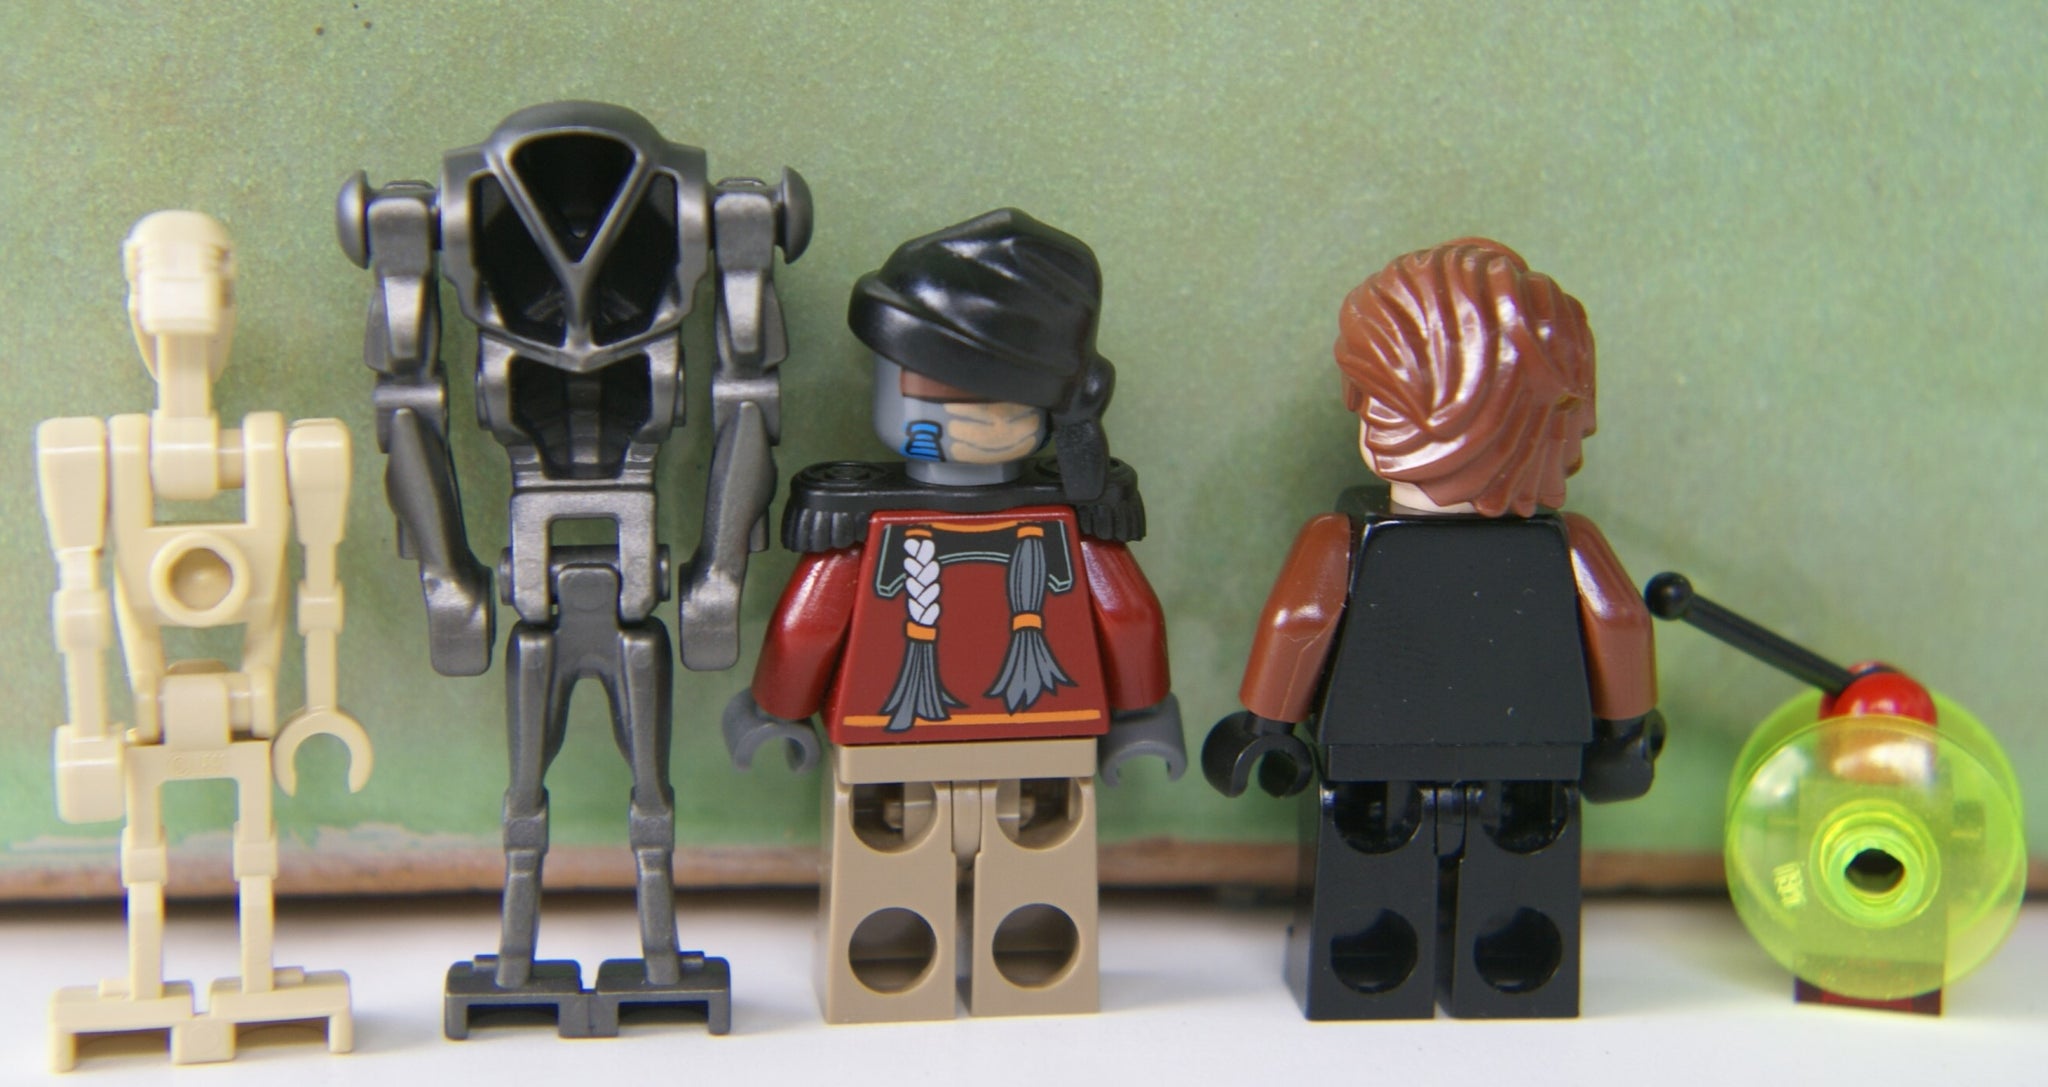 Scalpers gouge Lego fans desperate for freebie Skywalker Saga minifigure